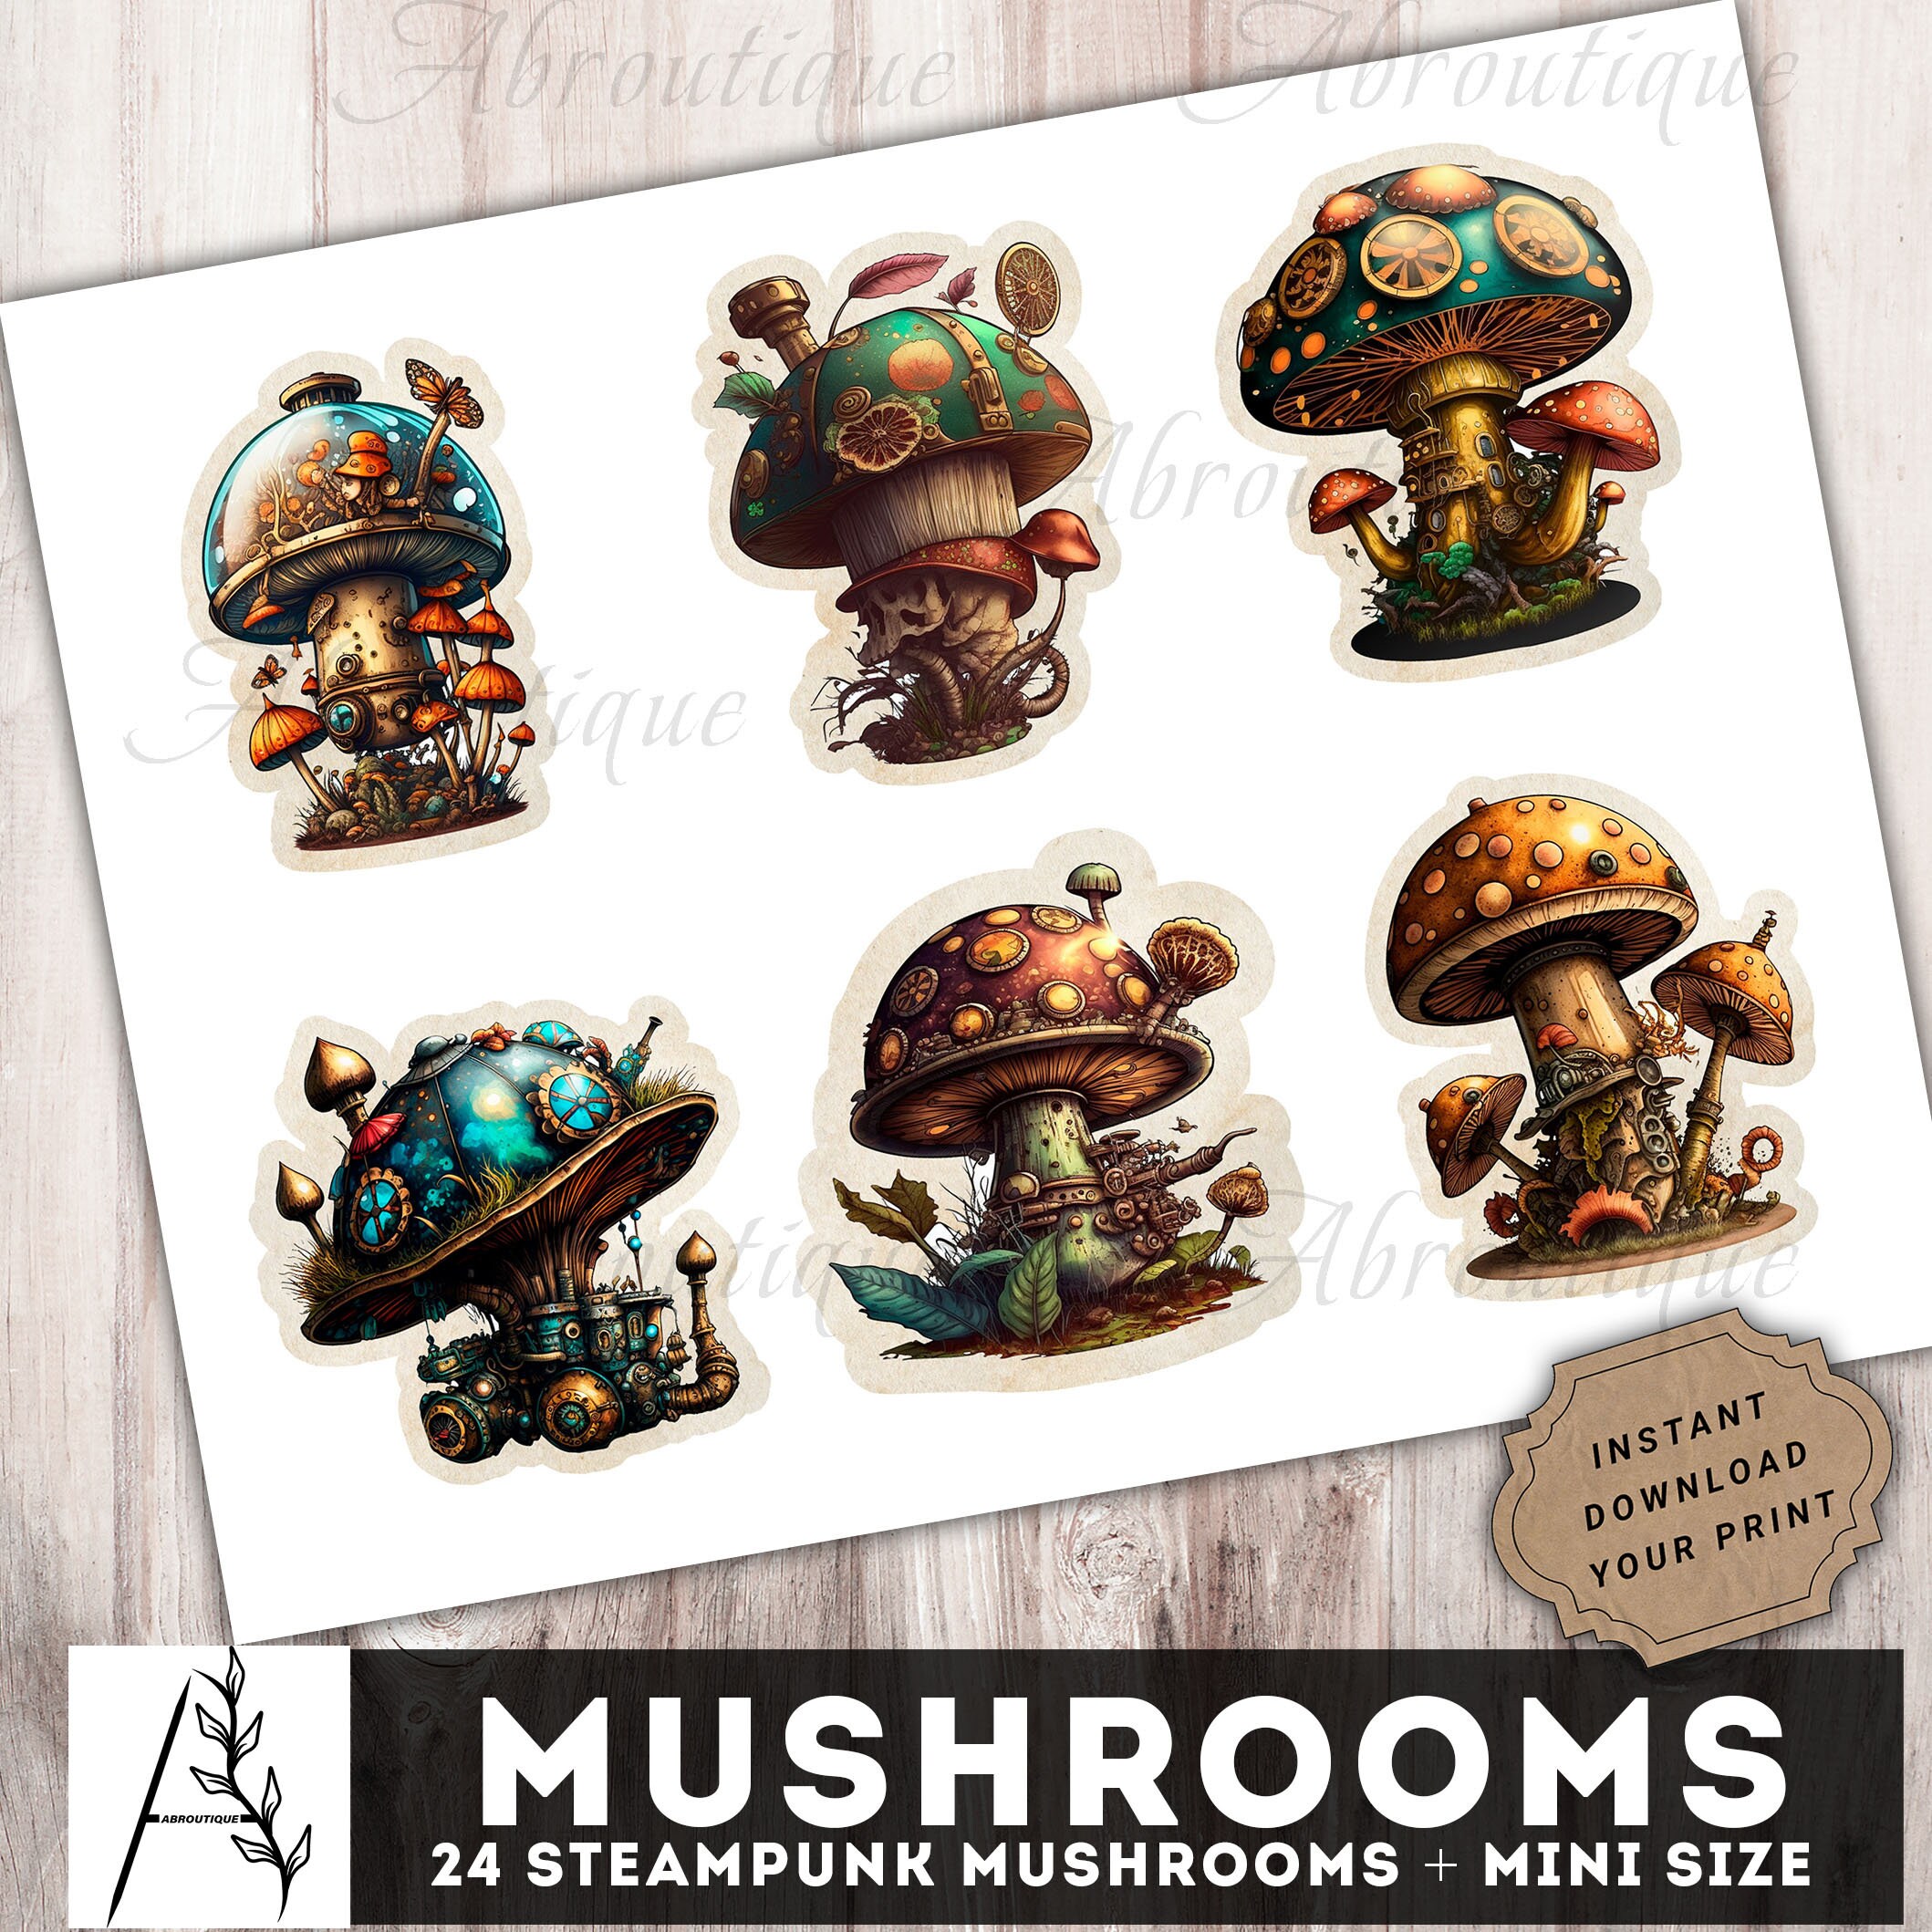 Mushroom Ephemera Book: High Quality Images Of Fungus For Paper Crafts,  Scrapbooking, Mixed Media, Junk Journals, Decorative Art, Artist Trading